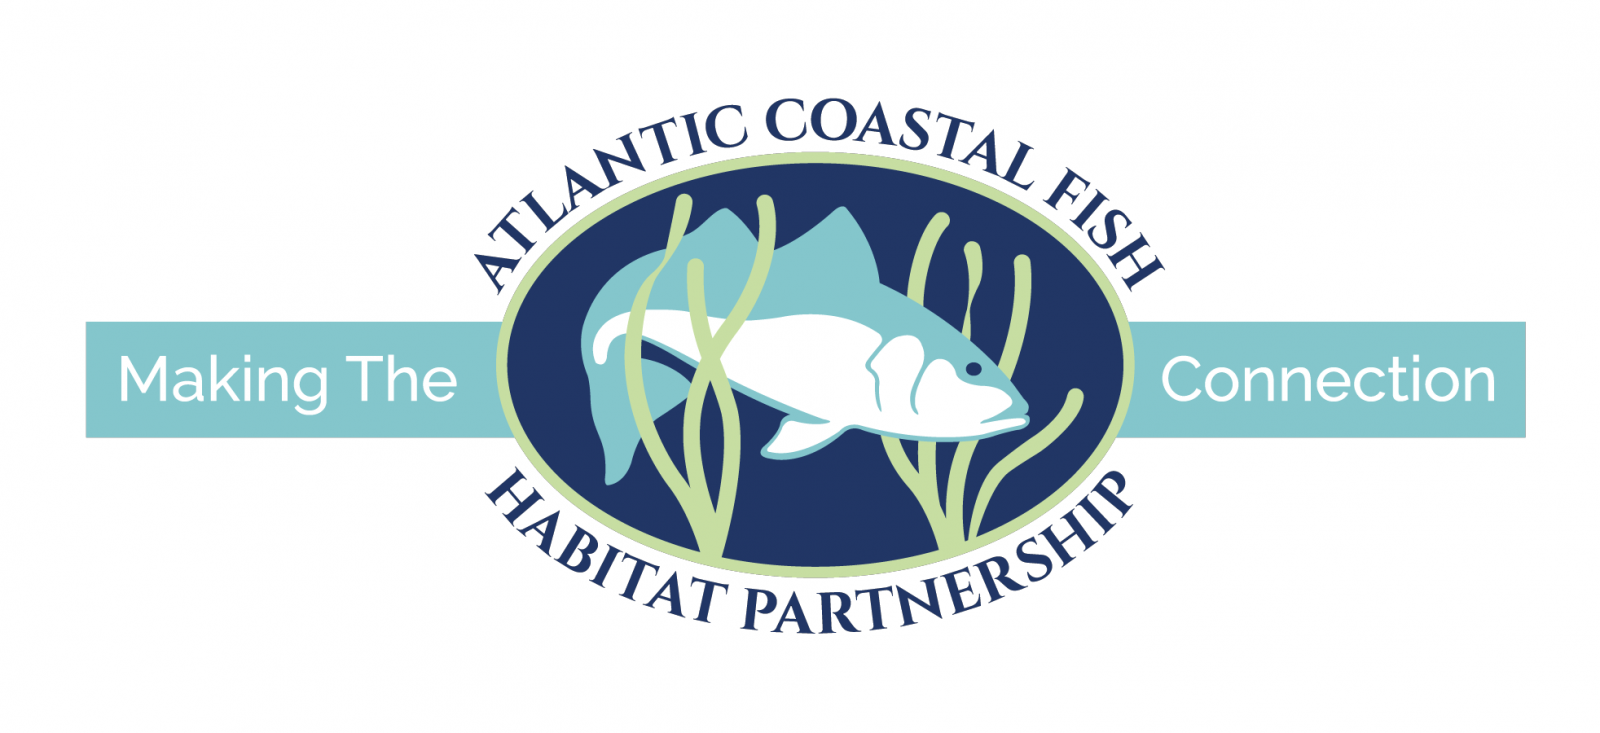 Atlantic Coastal Habitat Fish Partnership